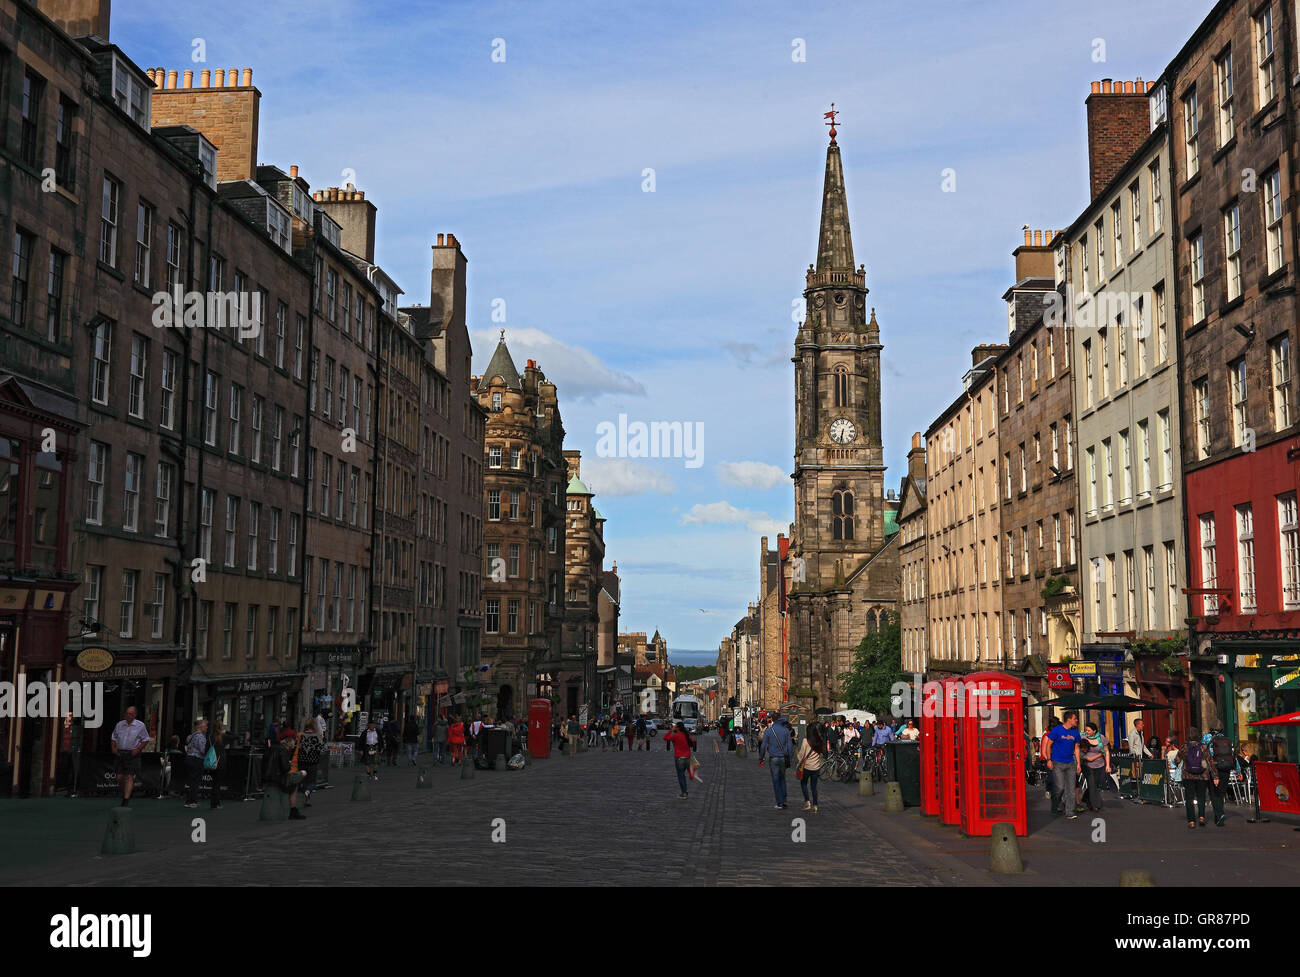 Scotland, Edinburgh, pelican crossing royal Mile, red telephone boxes Stock Photo